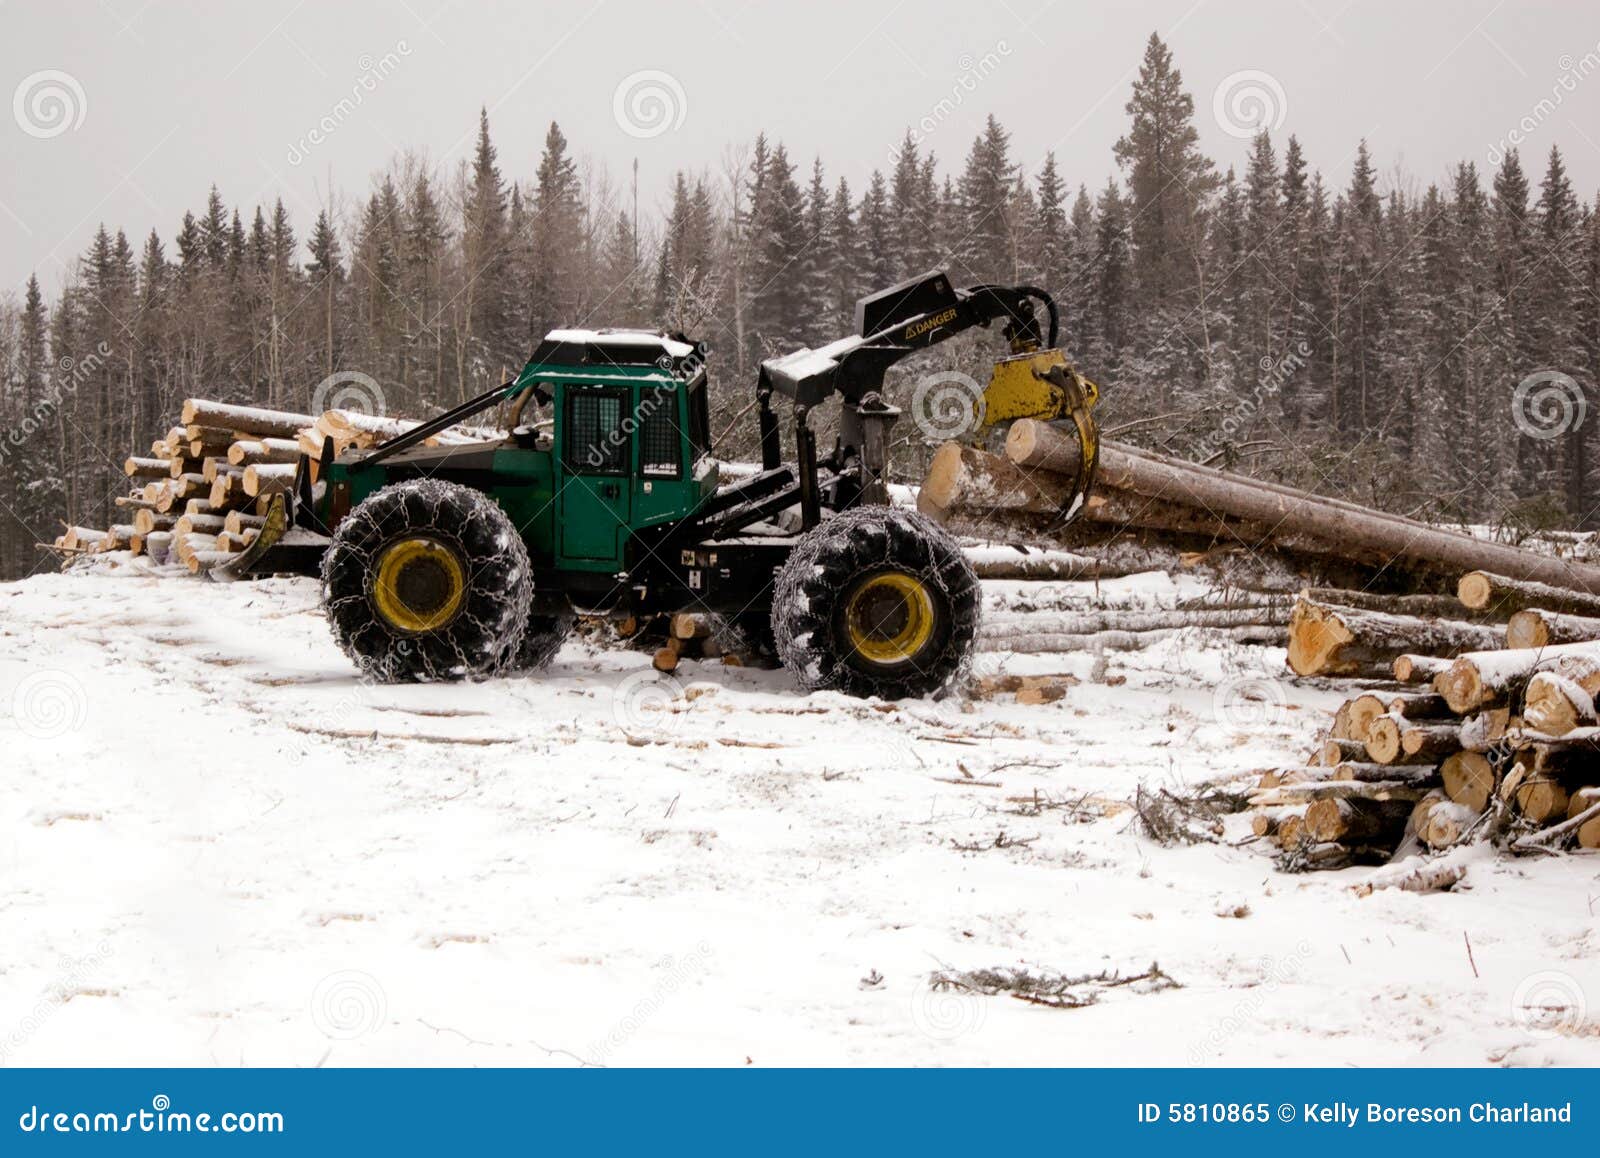 skidder hauling spruce tree